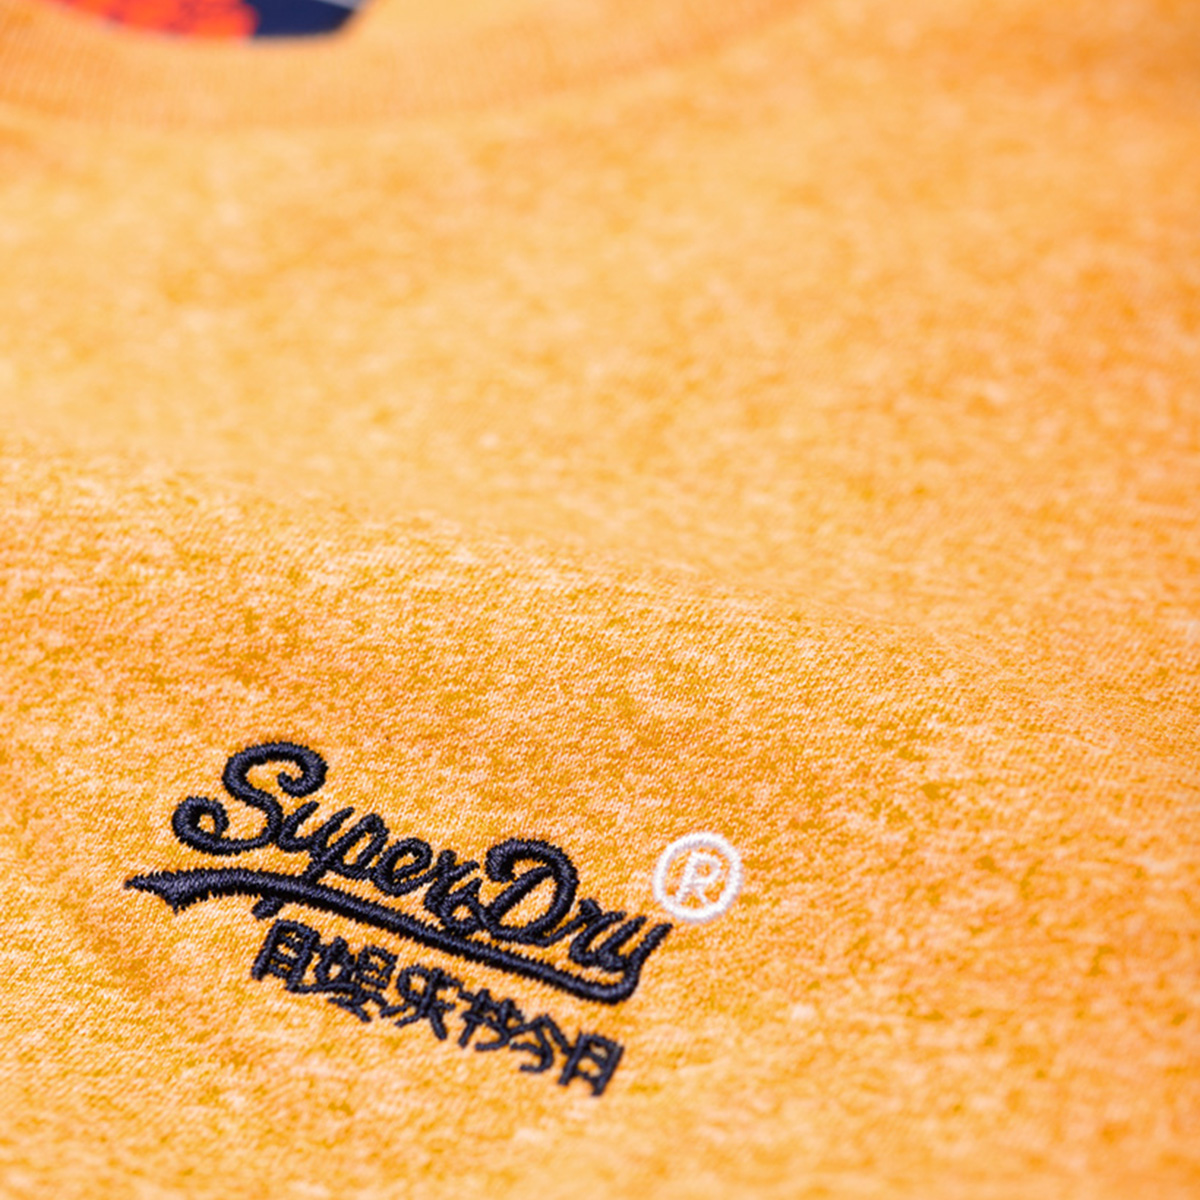 Superdry Herren Orange Label Vintage Embroidery S/S Tee T-Shirt M10001RT Gelb 